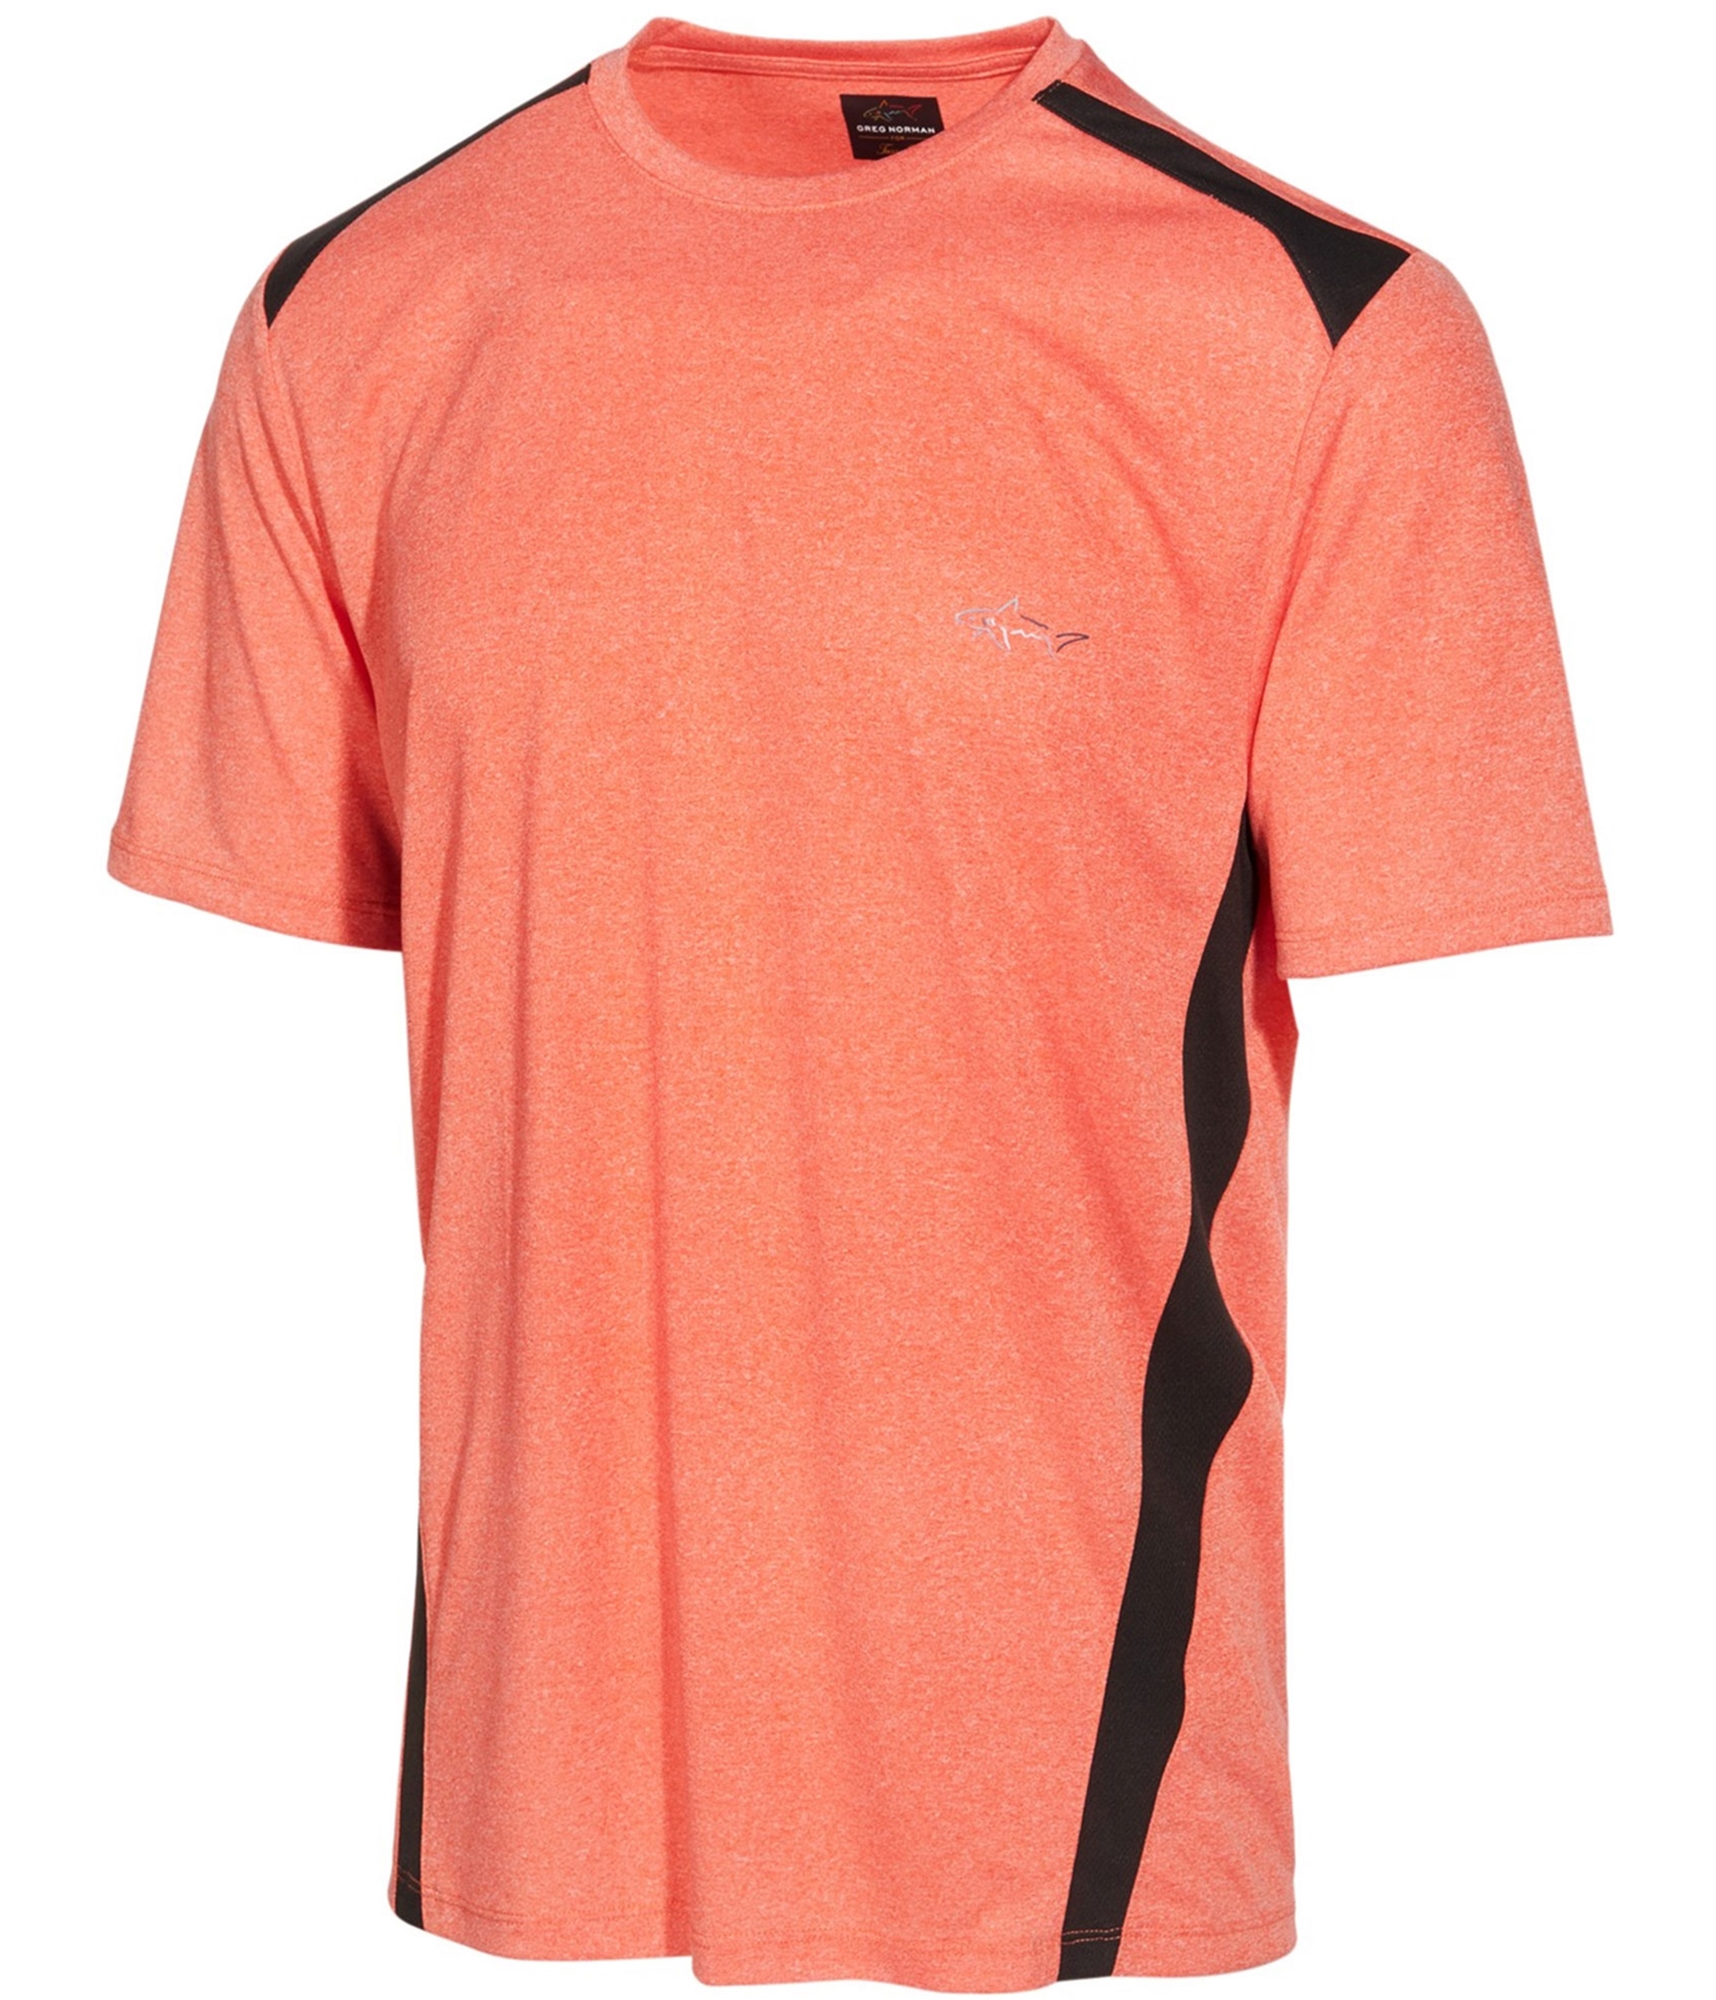 Greg Norman Mens Attack Life Basic T-Shirt | eBay